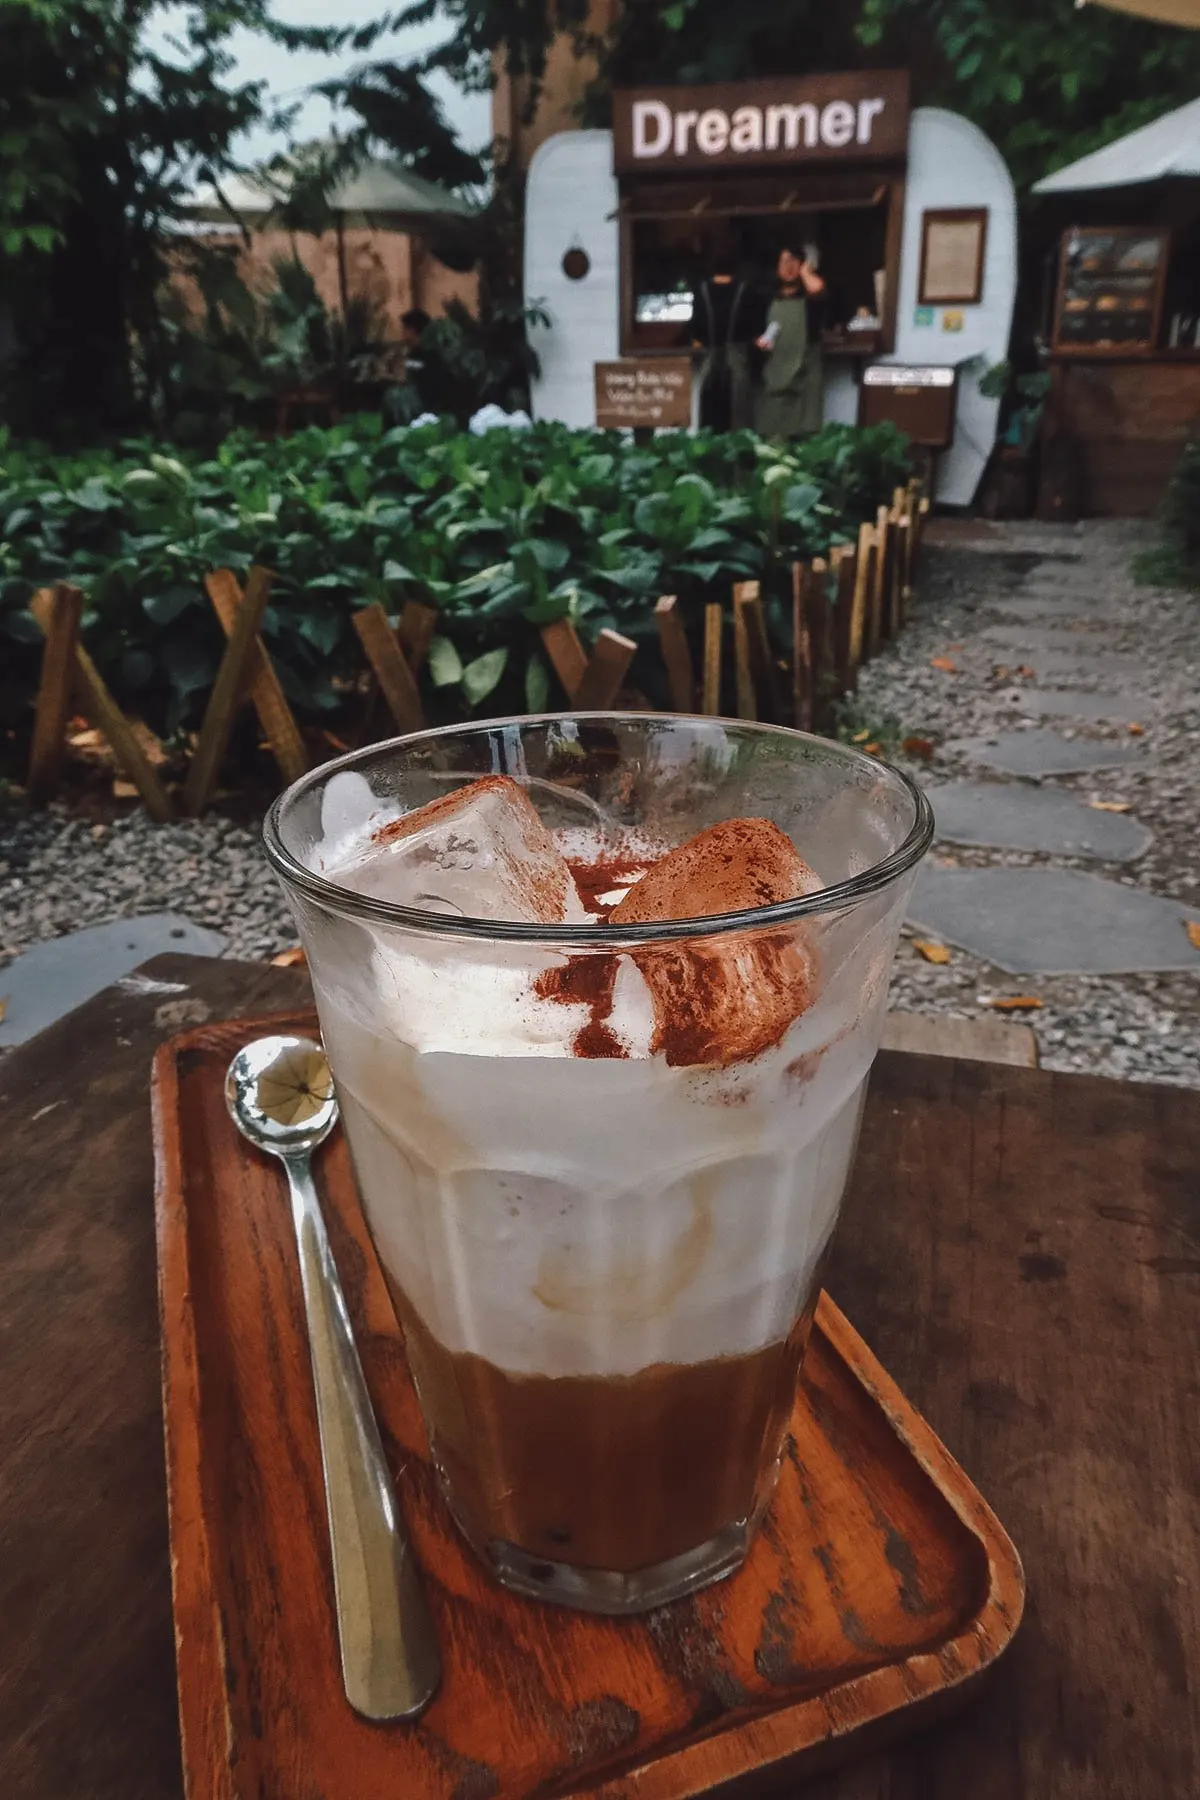 Salt coffee at a cafe in Danang, Vietnam